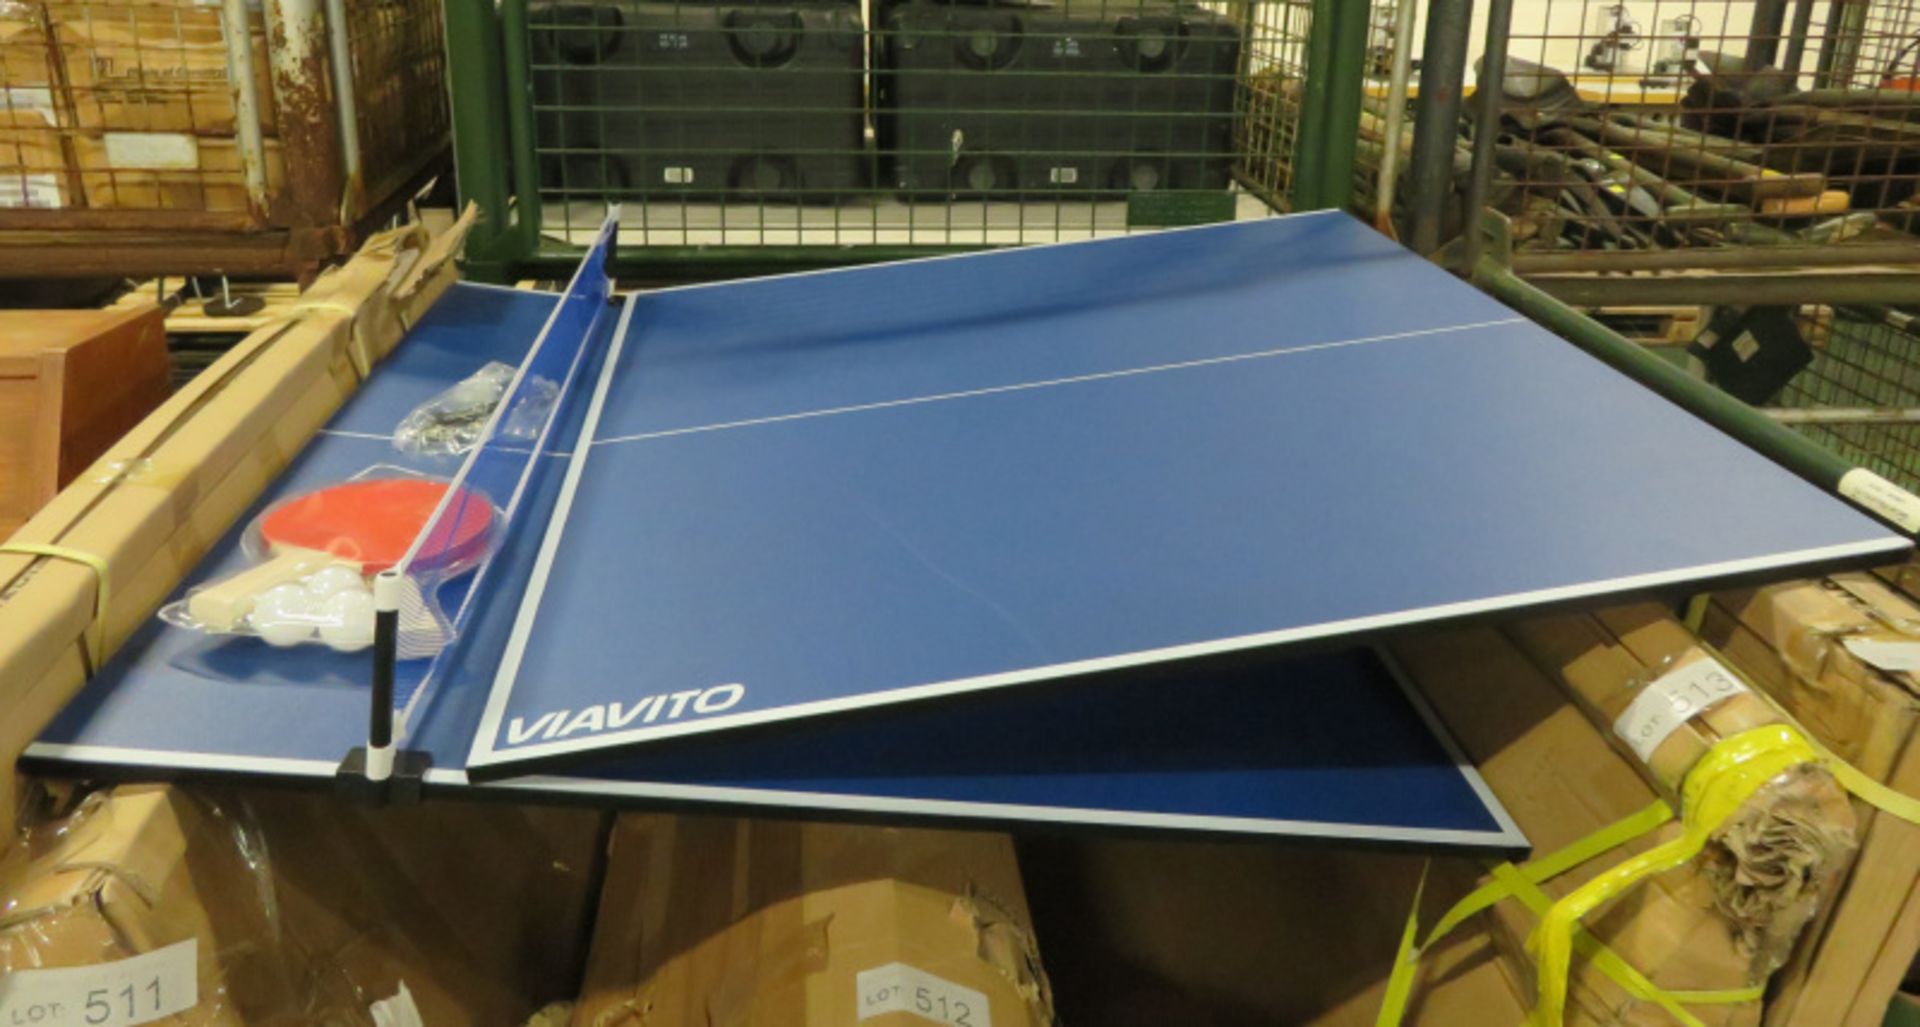 Viavito Flipit table tennis top - Image 3 of 6